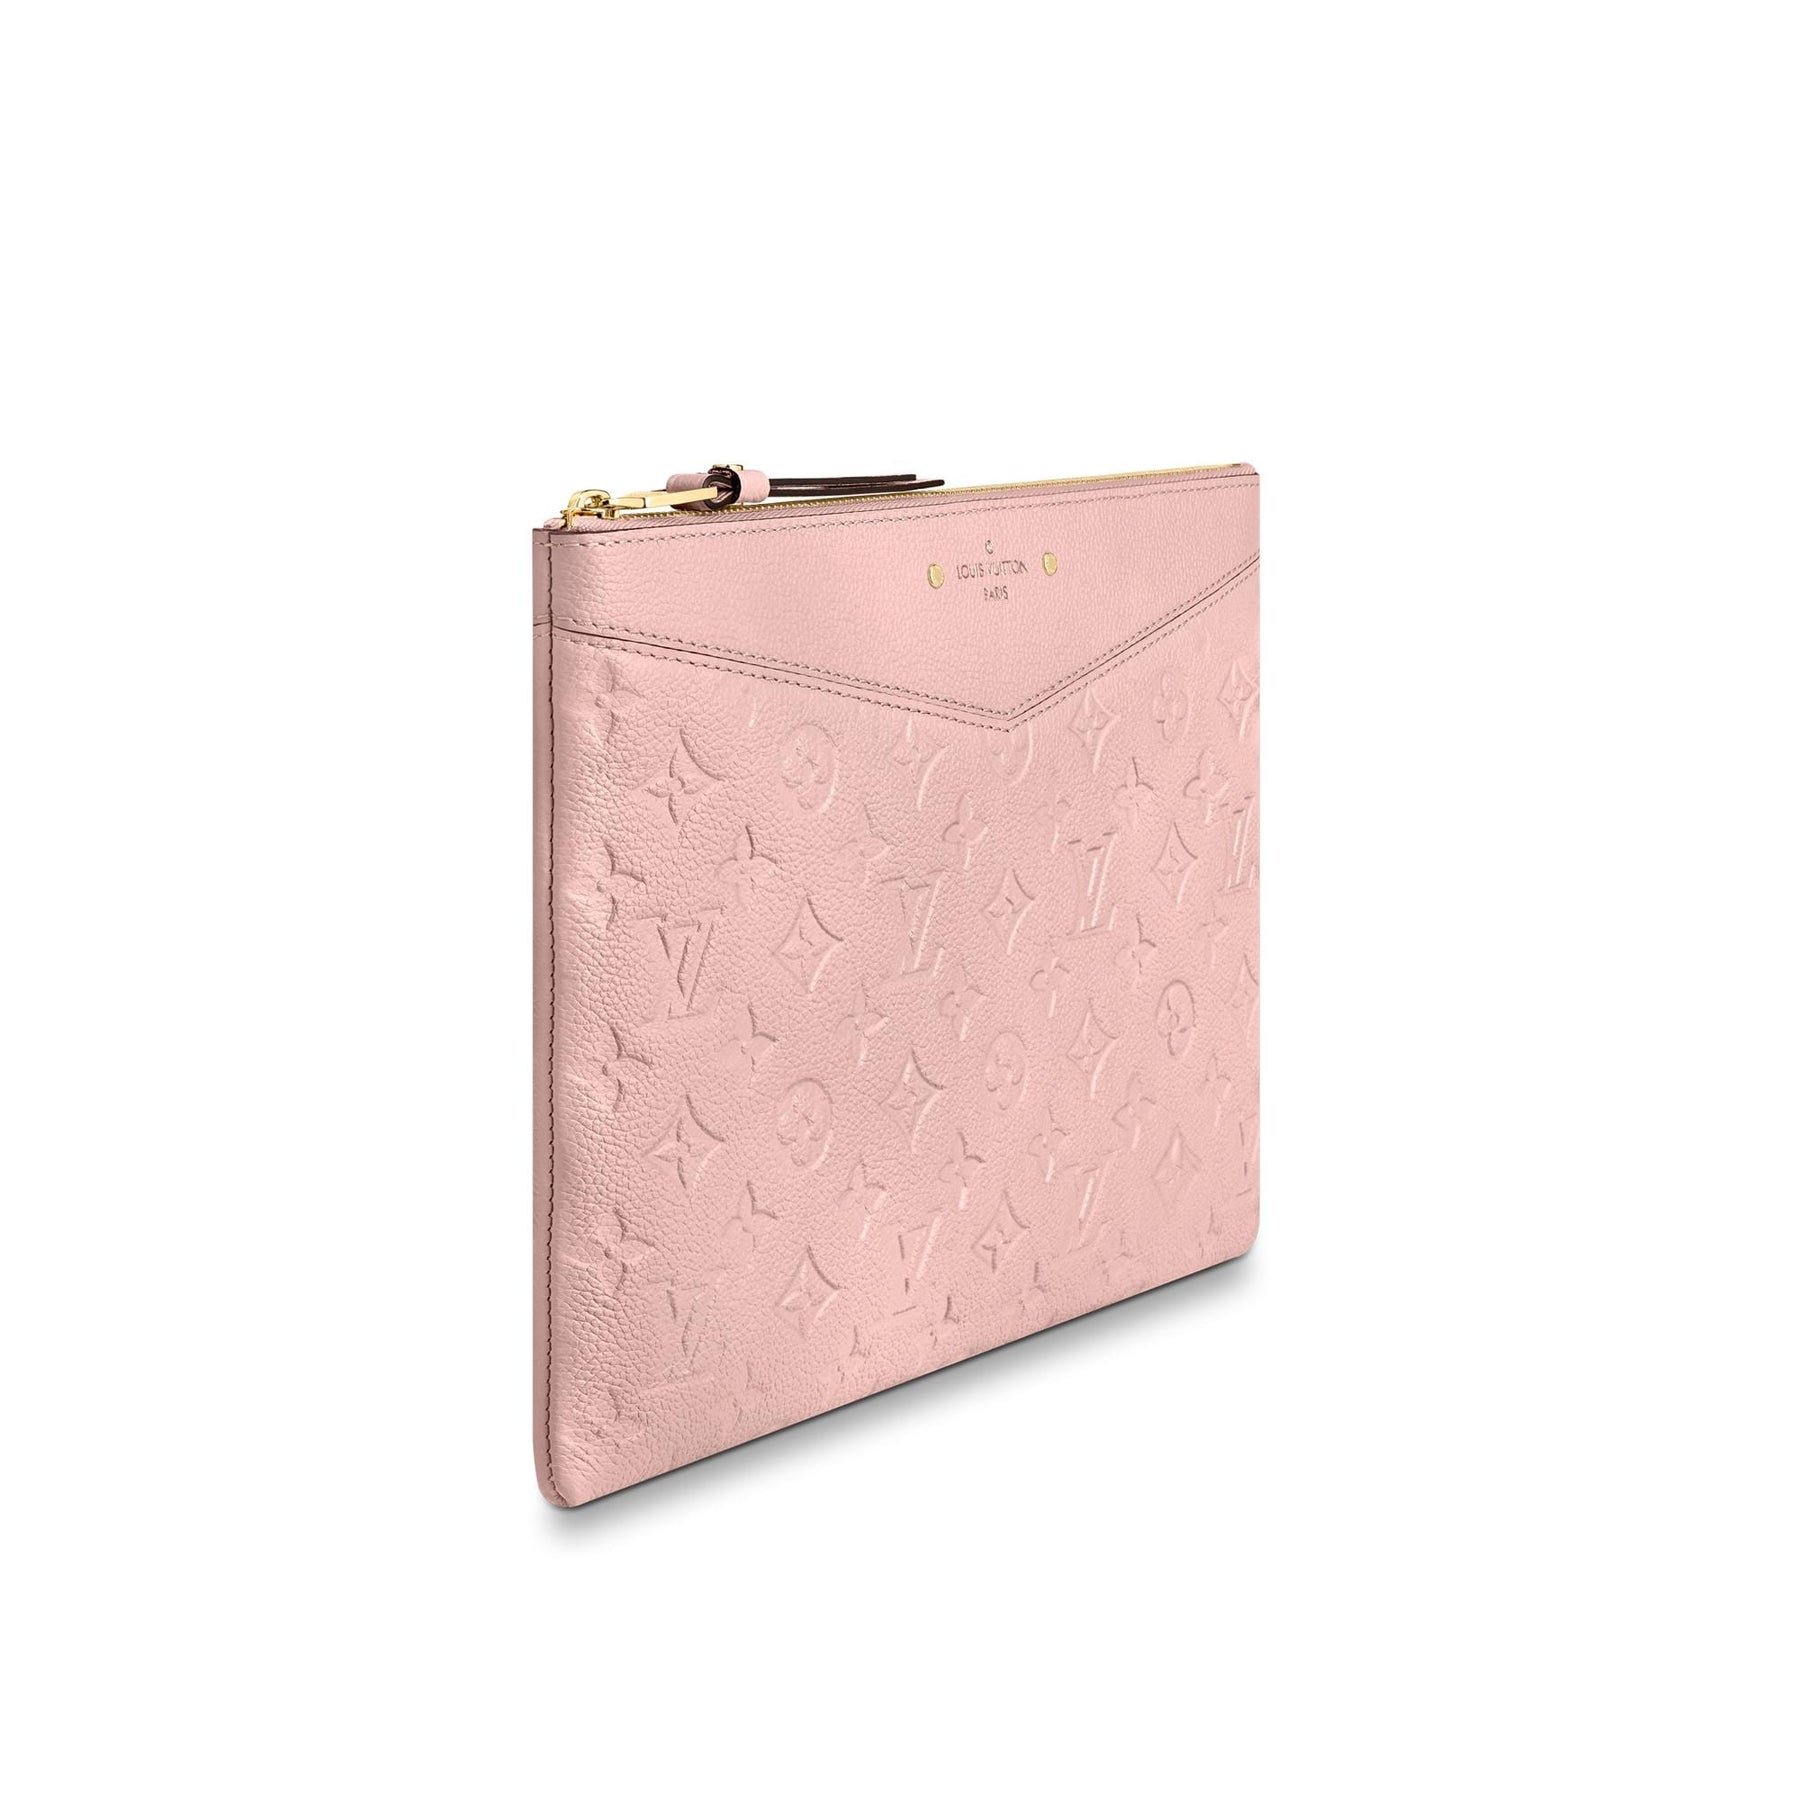 LOUIS VUITTON Monogram Empreinte Leather Zippy Wallet Rose Poudre Pink